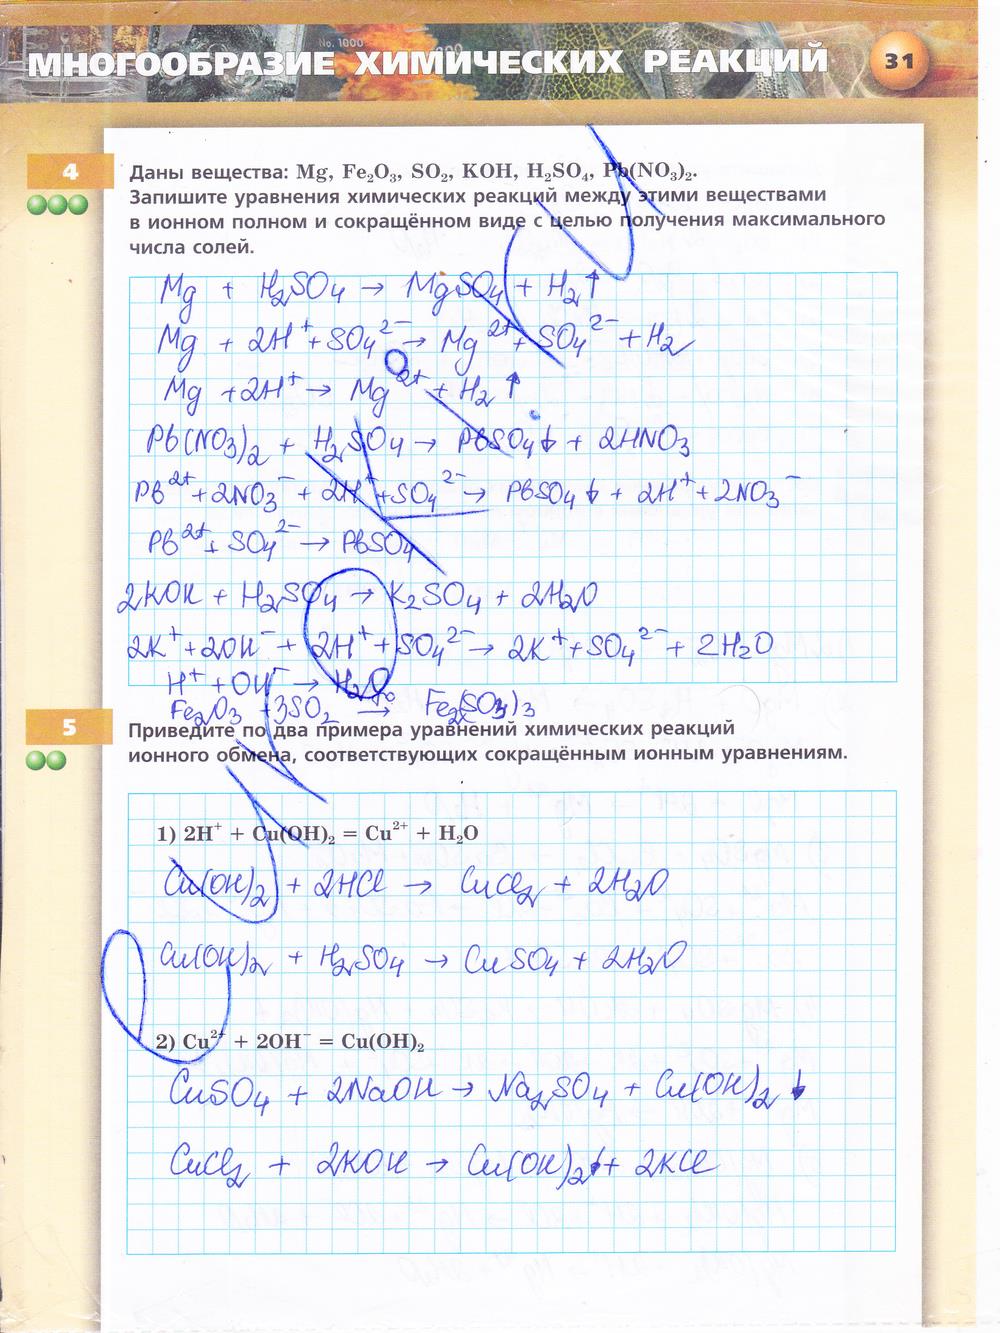 гдз 9 класс тетрадь-тренажёр страница 31 химия Гара